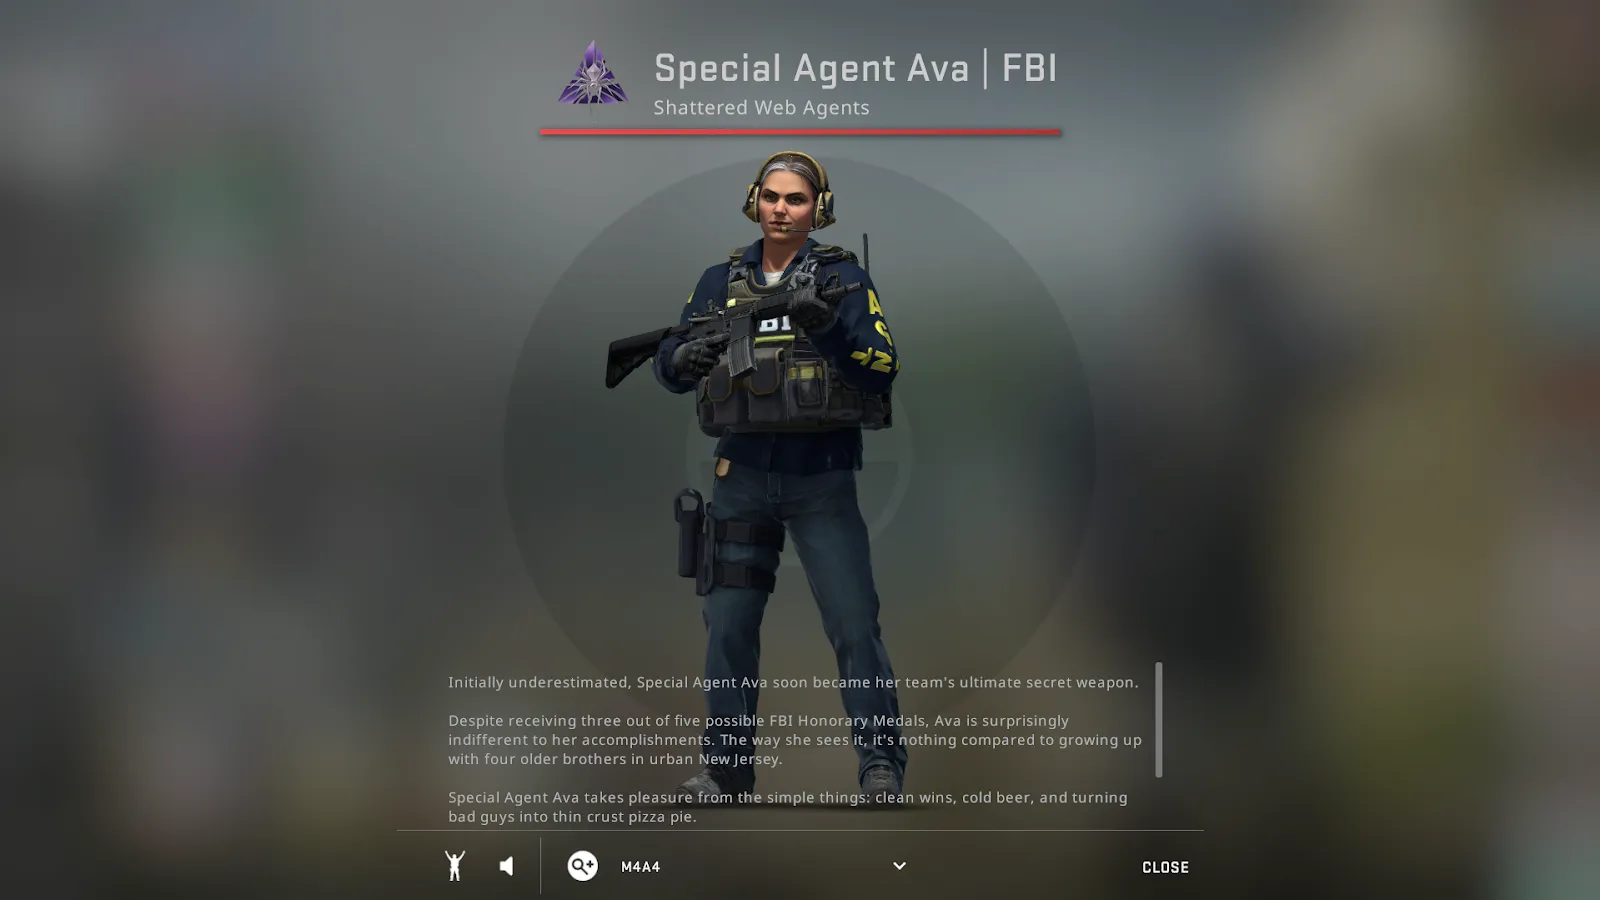 Special Agent Ava